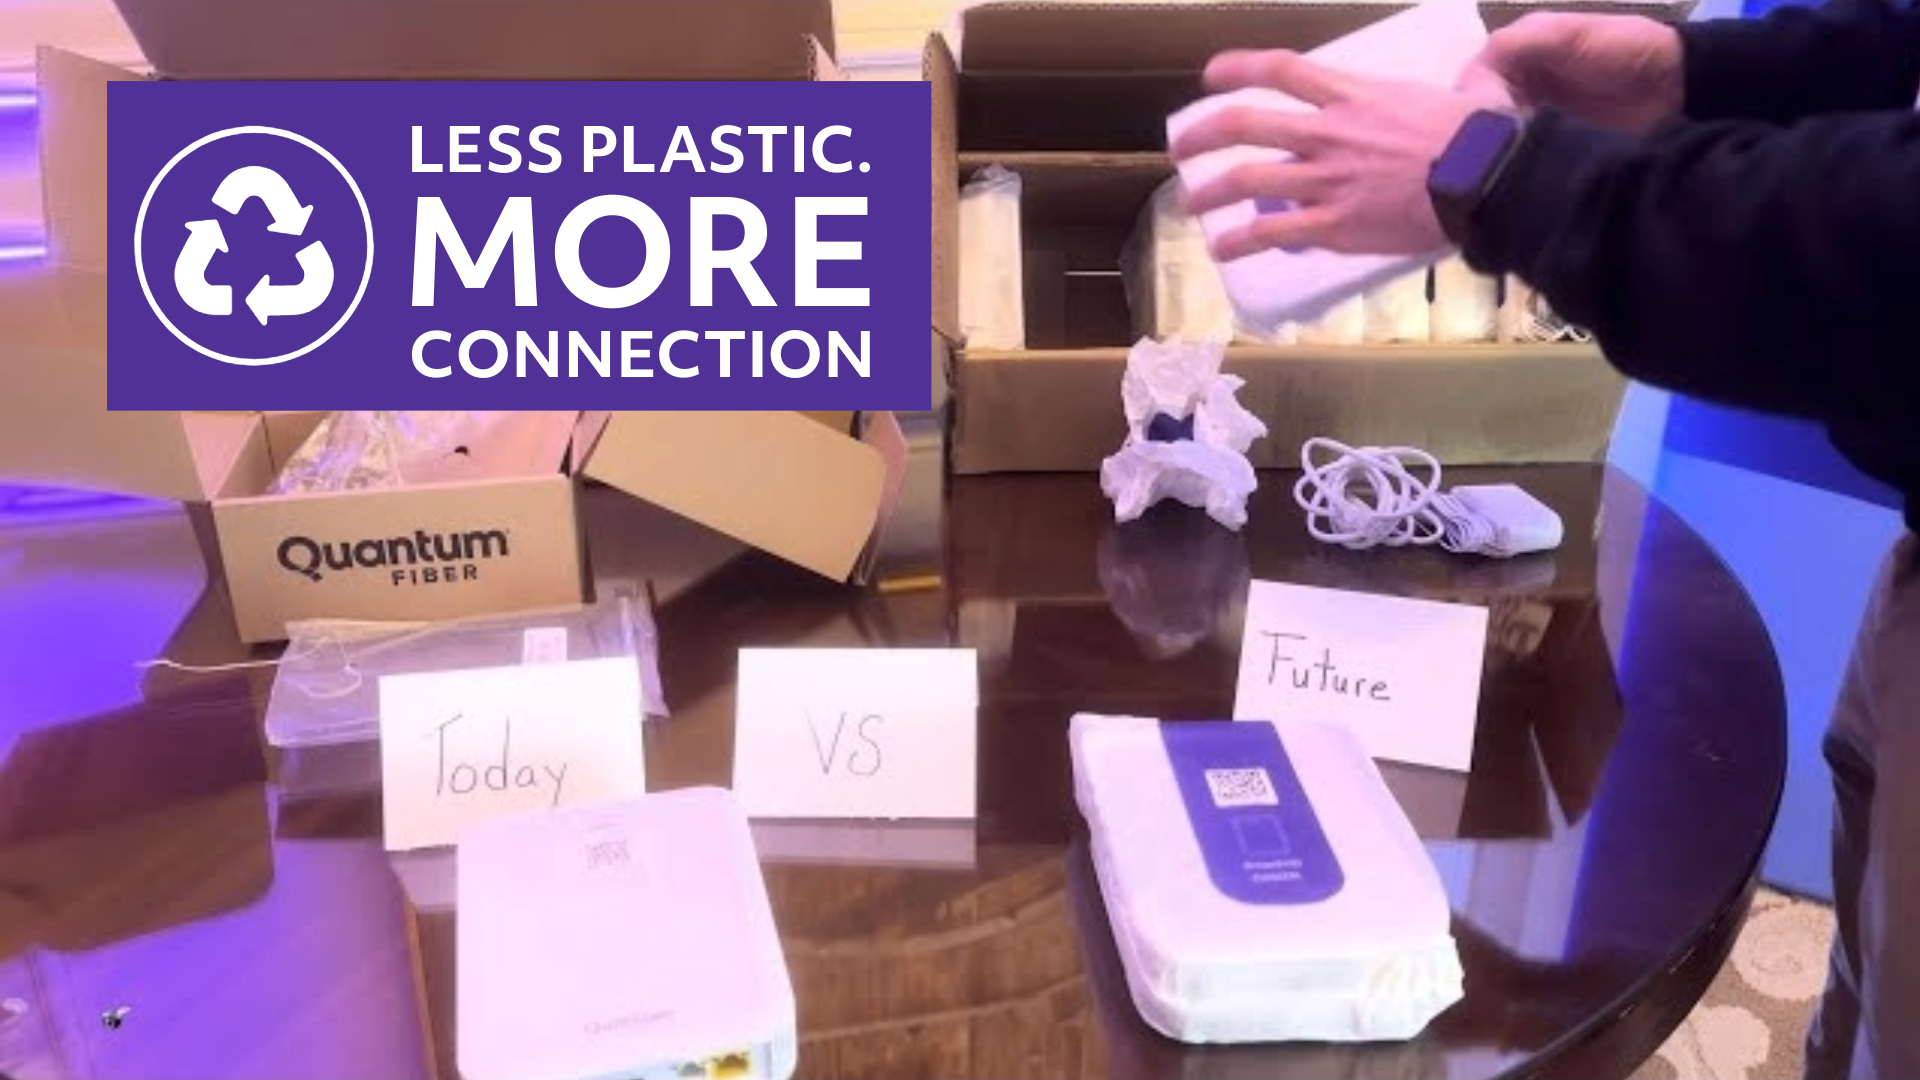 Less Plastic. More Connection